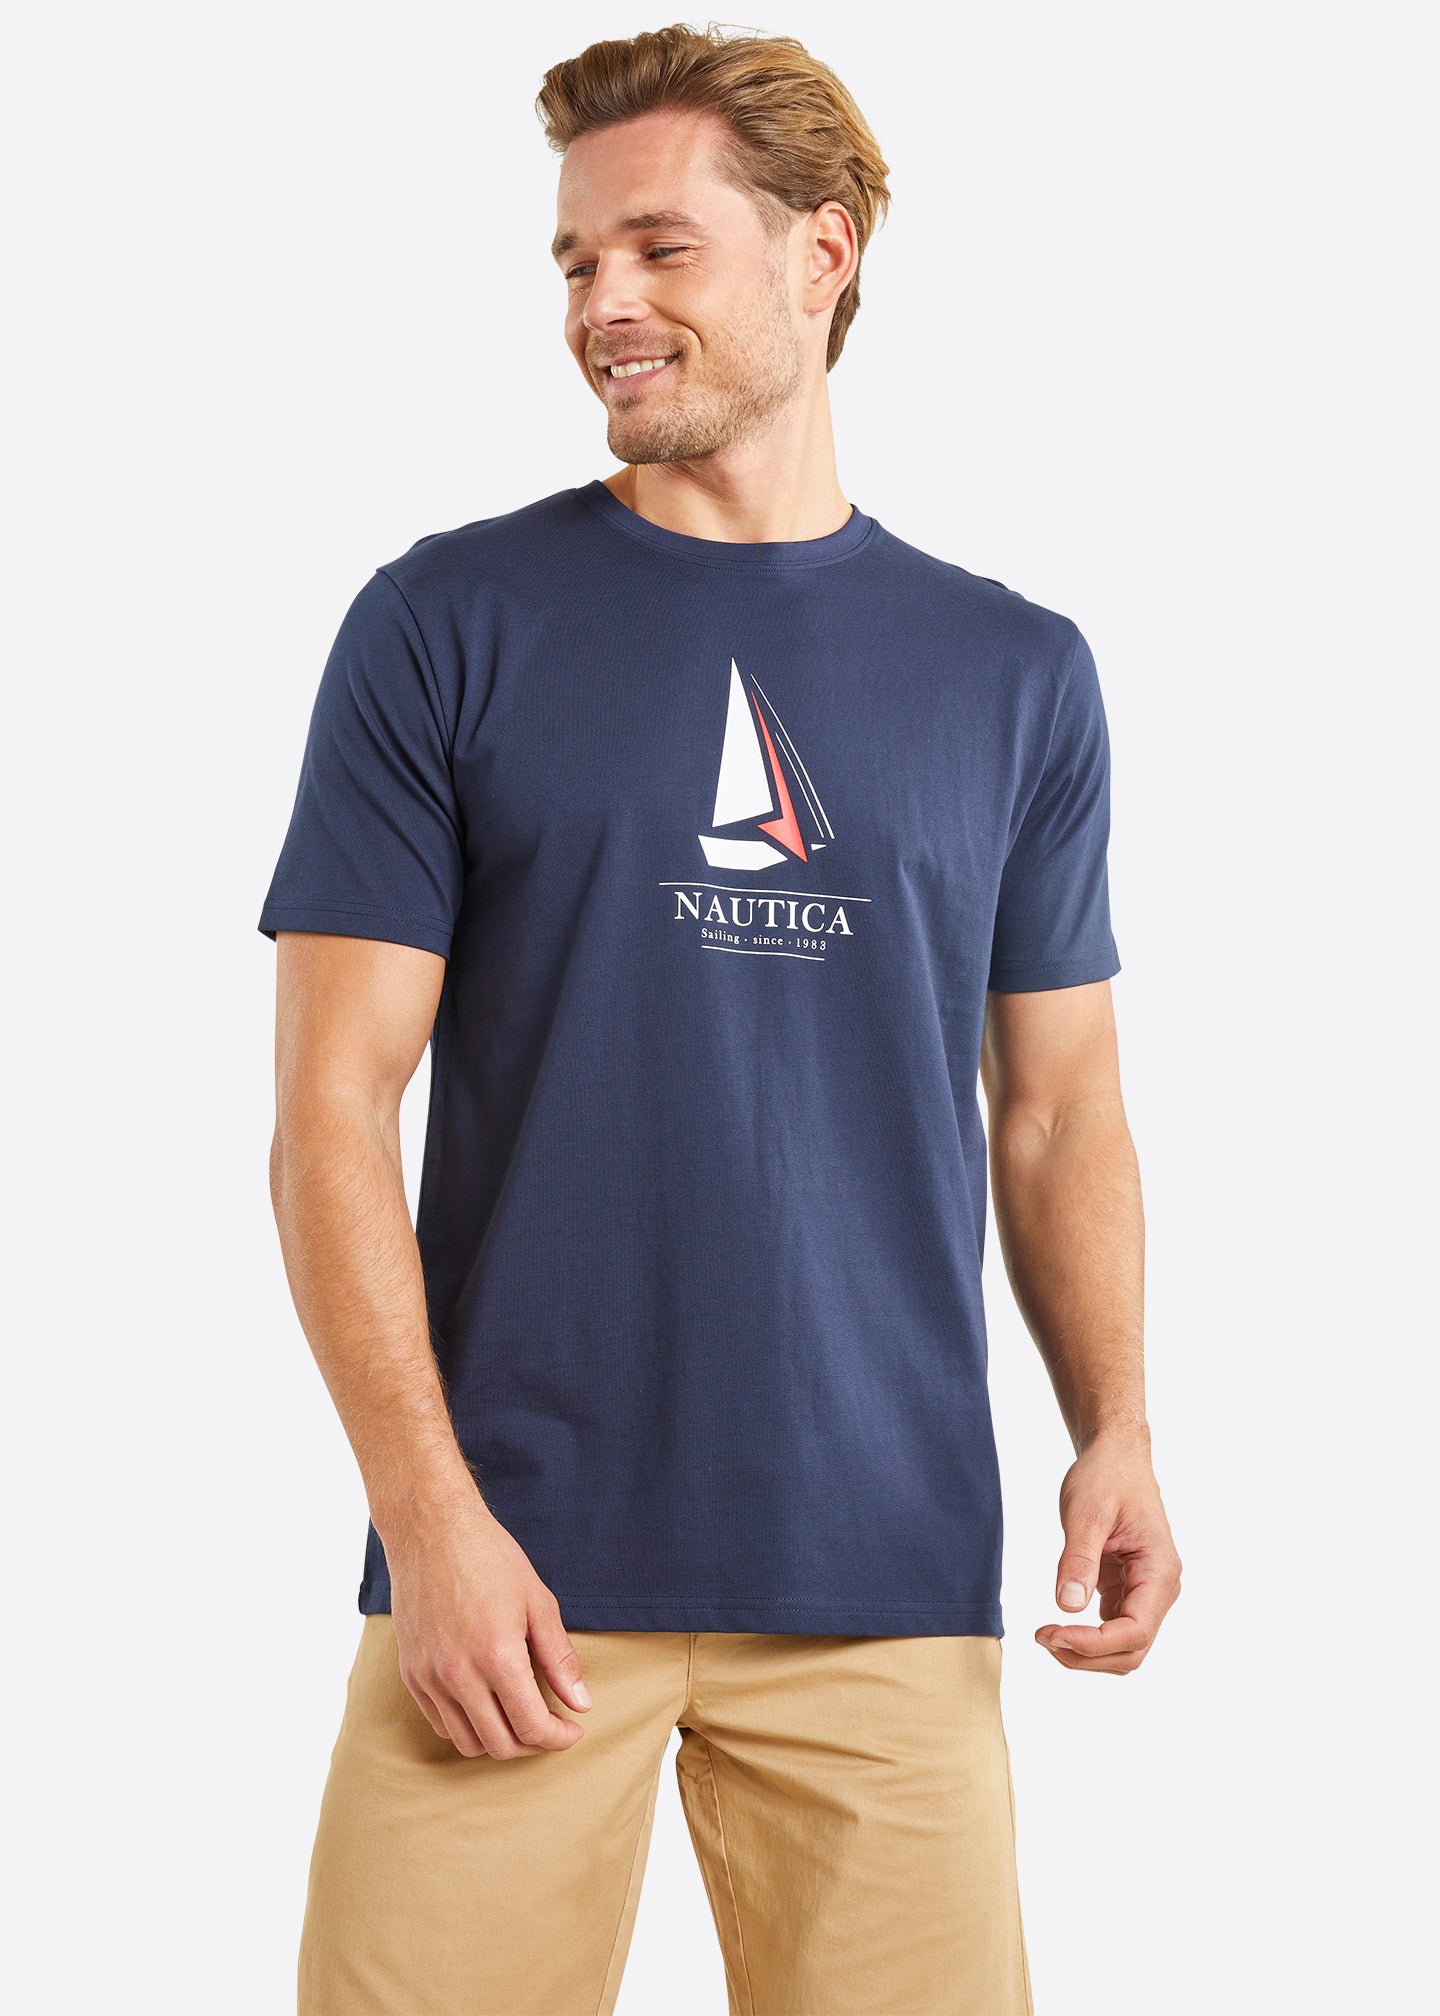 Nautica Evander T-Shirt - Dark Navy - Front